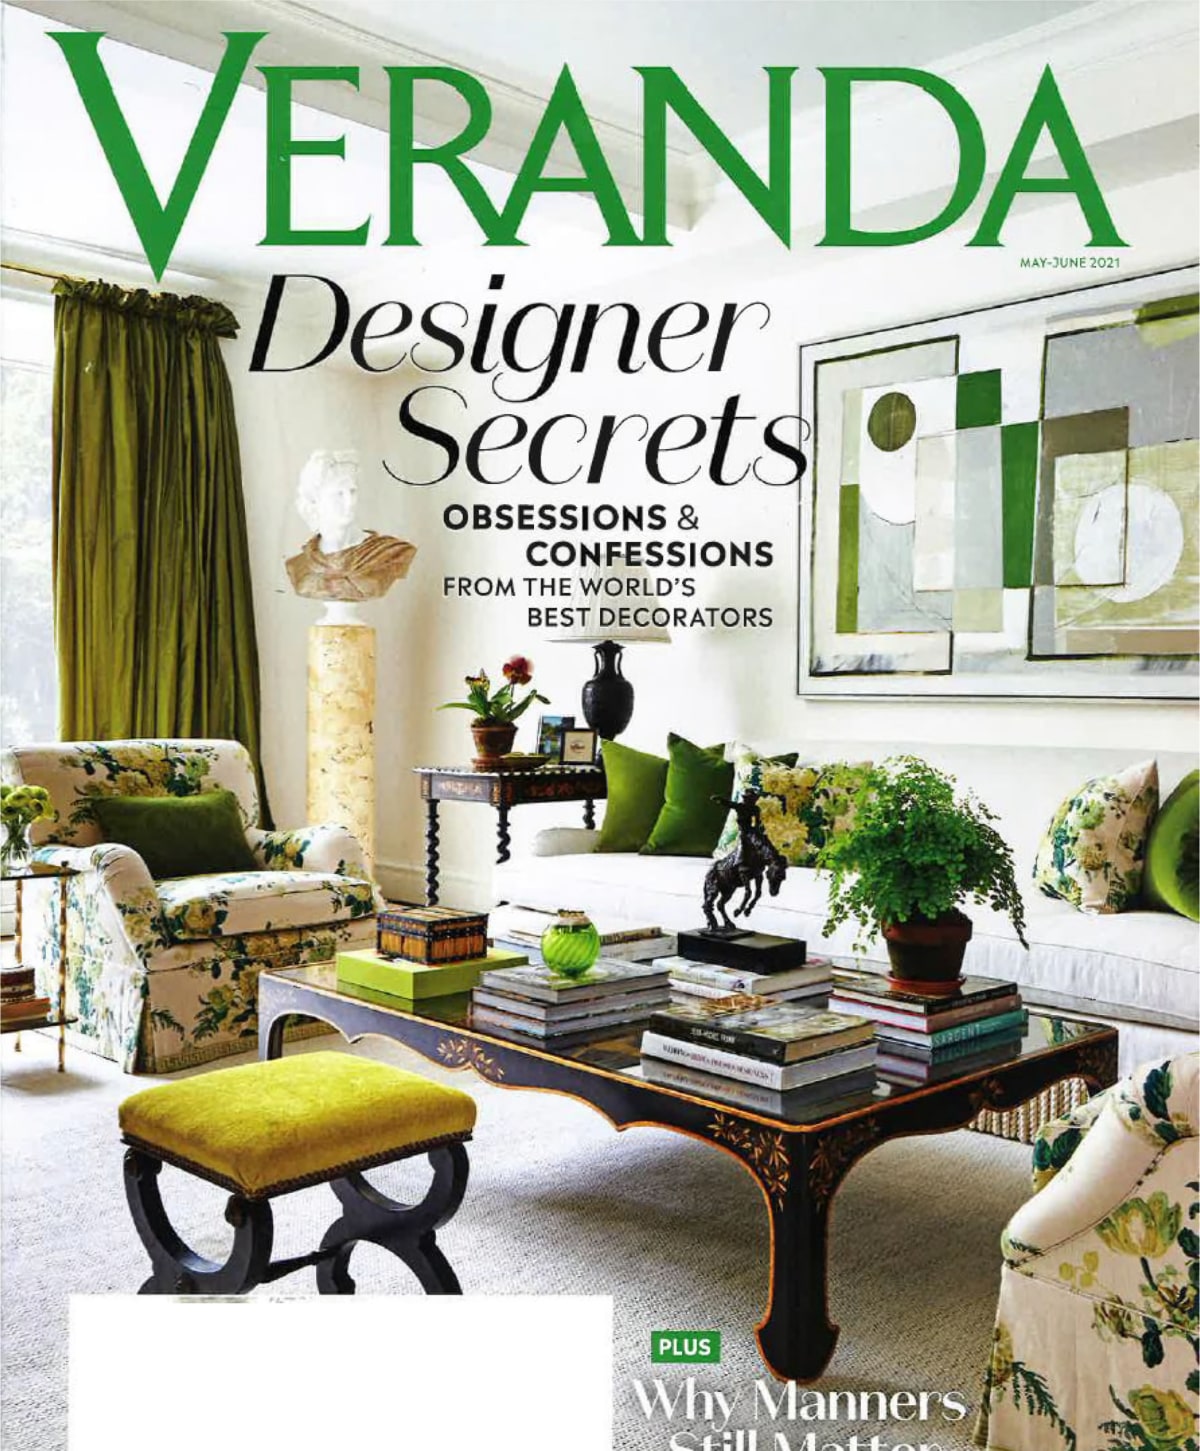 Cover image of Veranda magazine from May-June 2021